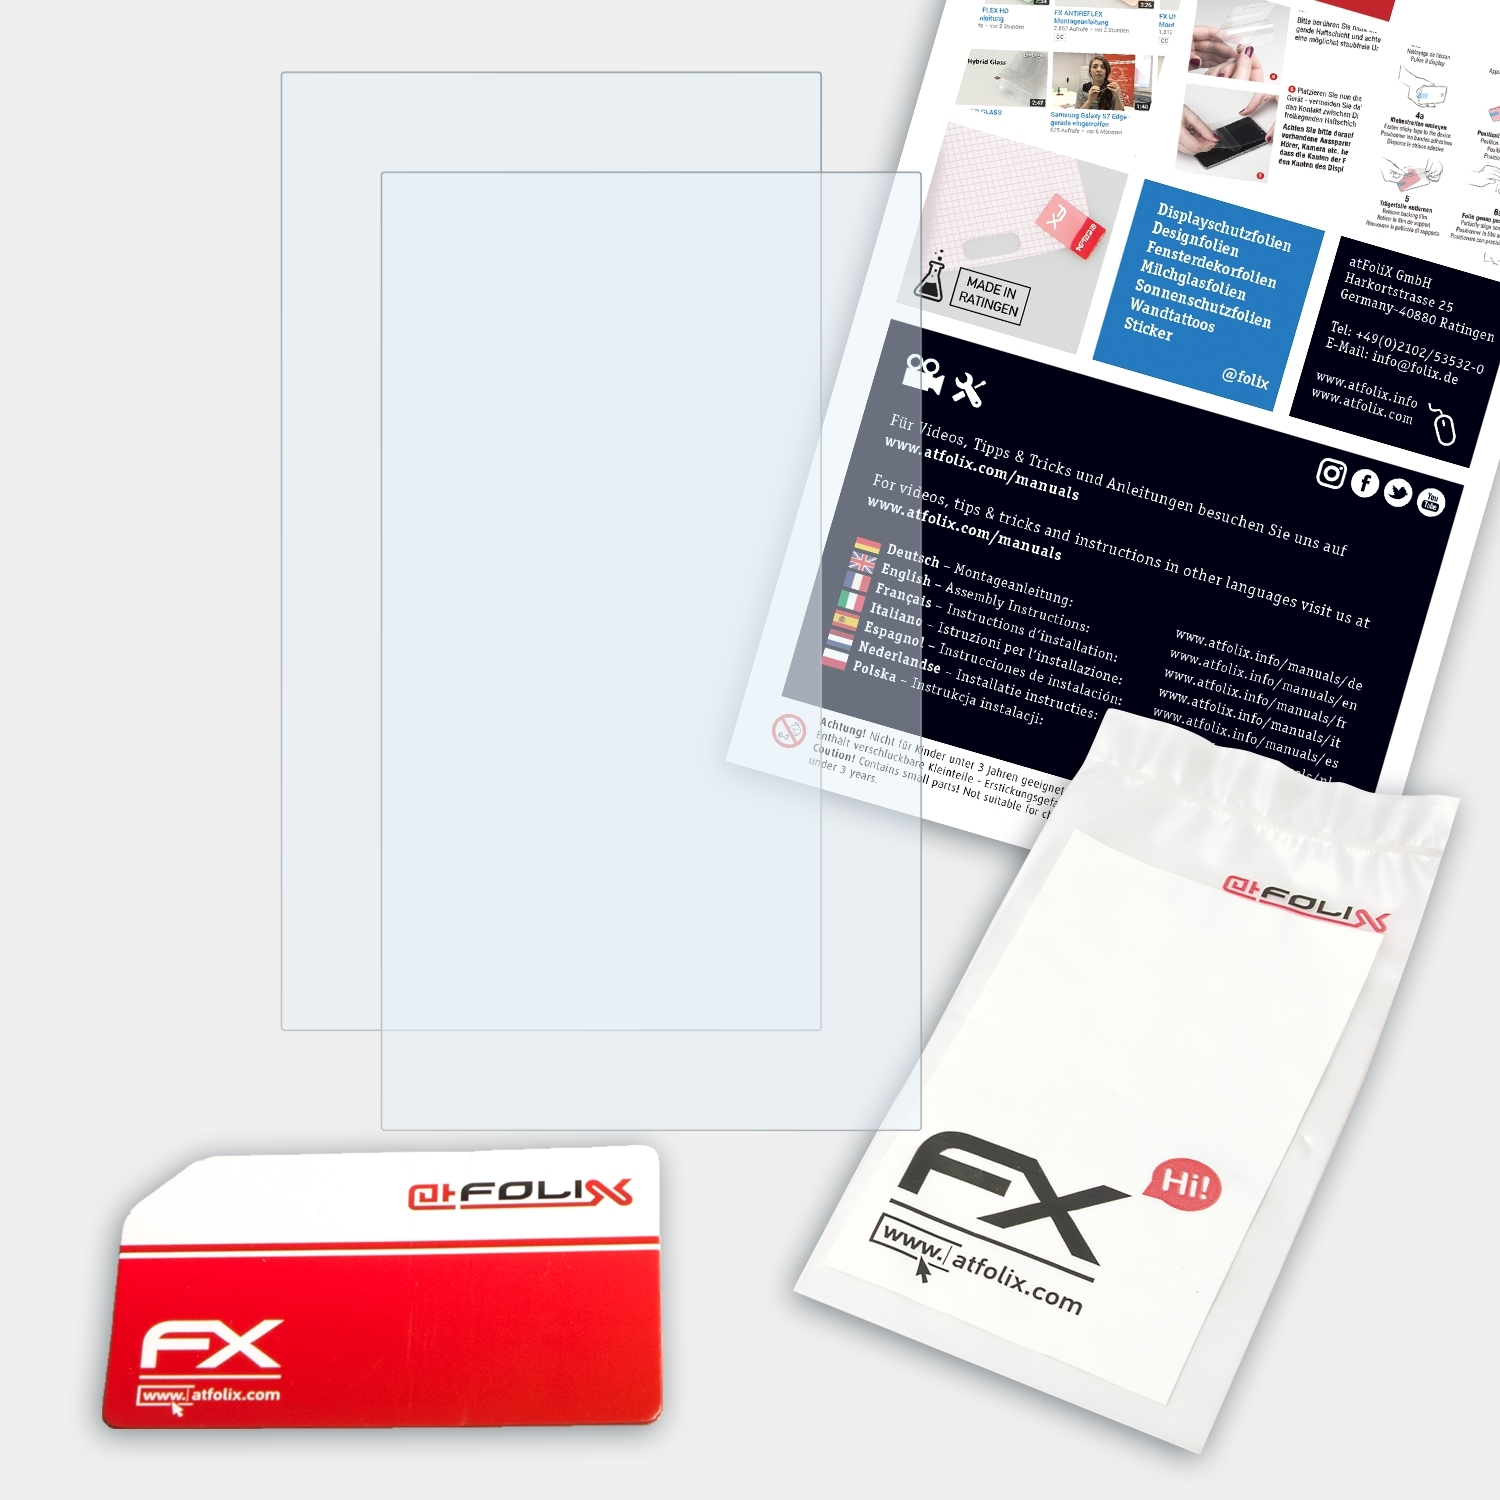 FX-Clear ATFOLIX Asus Displayschutz(für 14 (UX433FAC)) 2x ZenBook